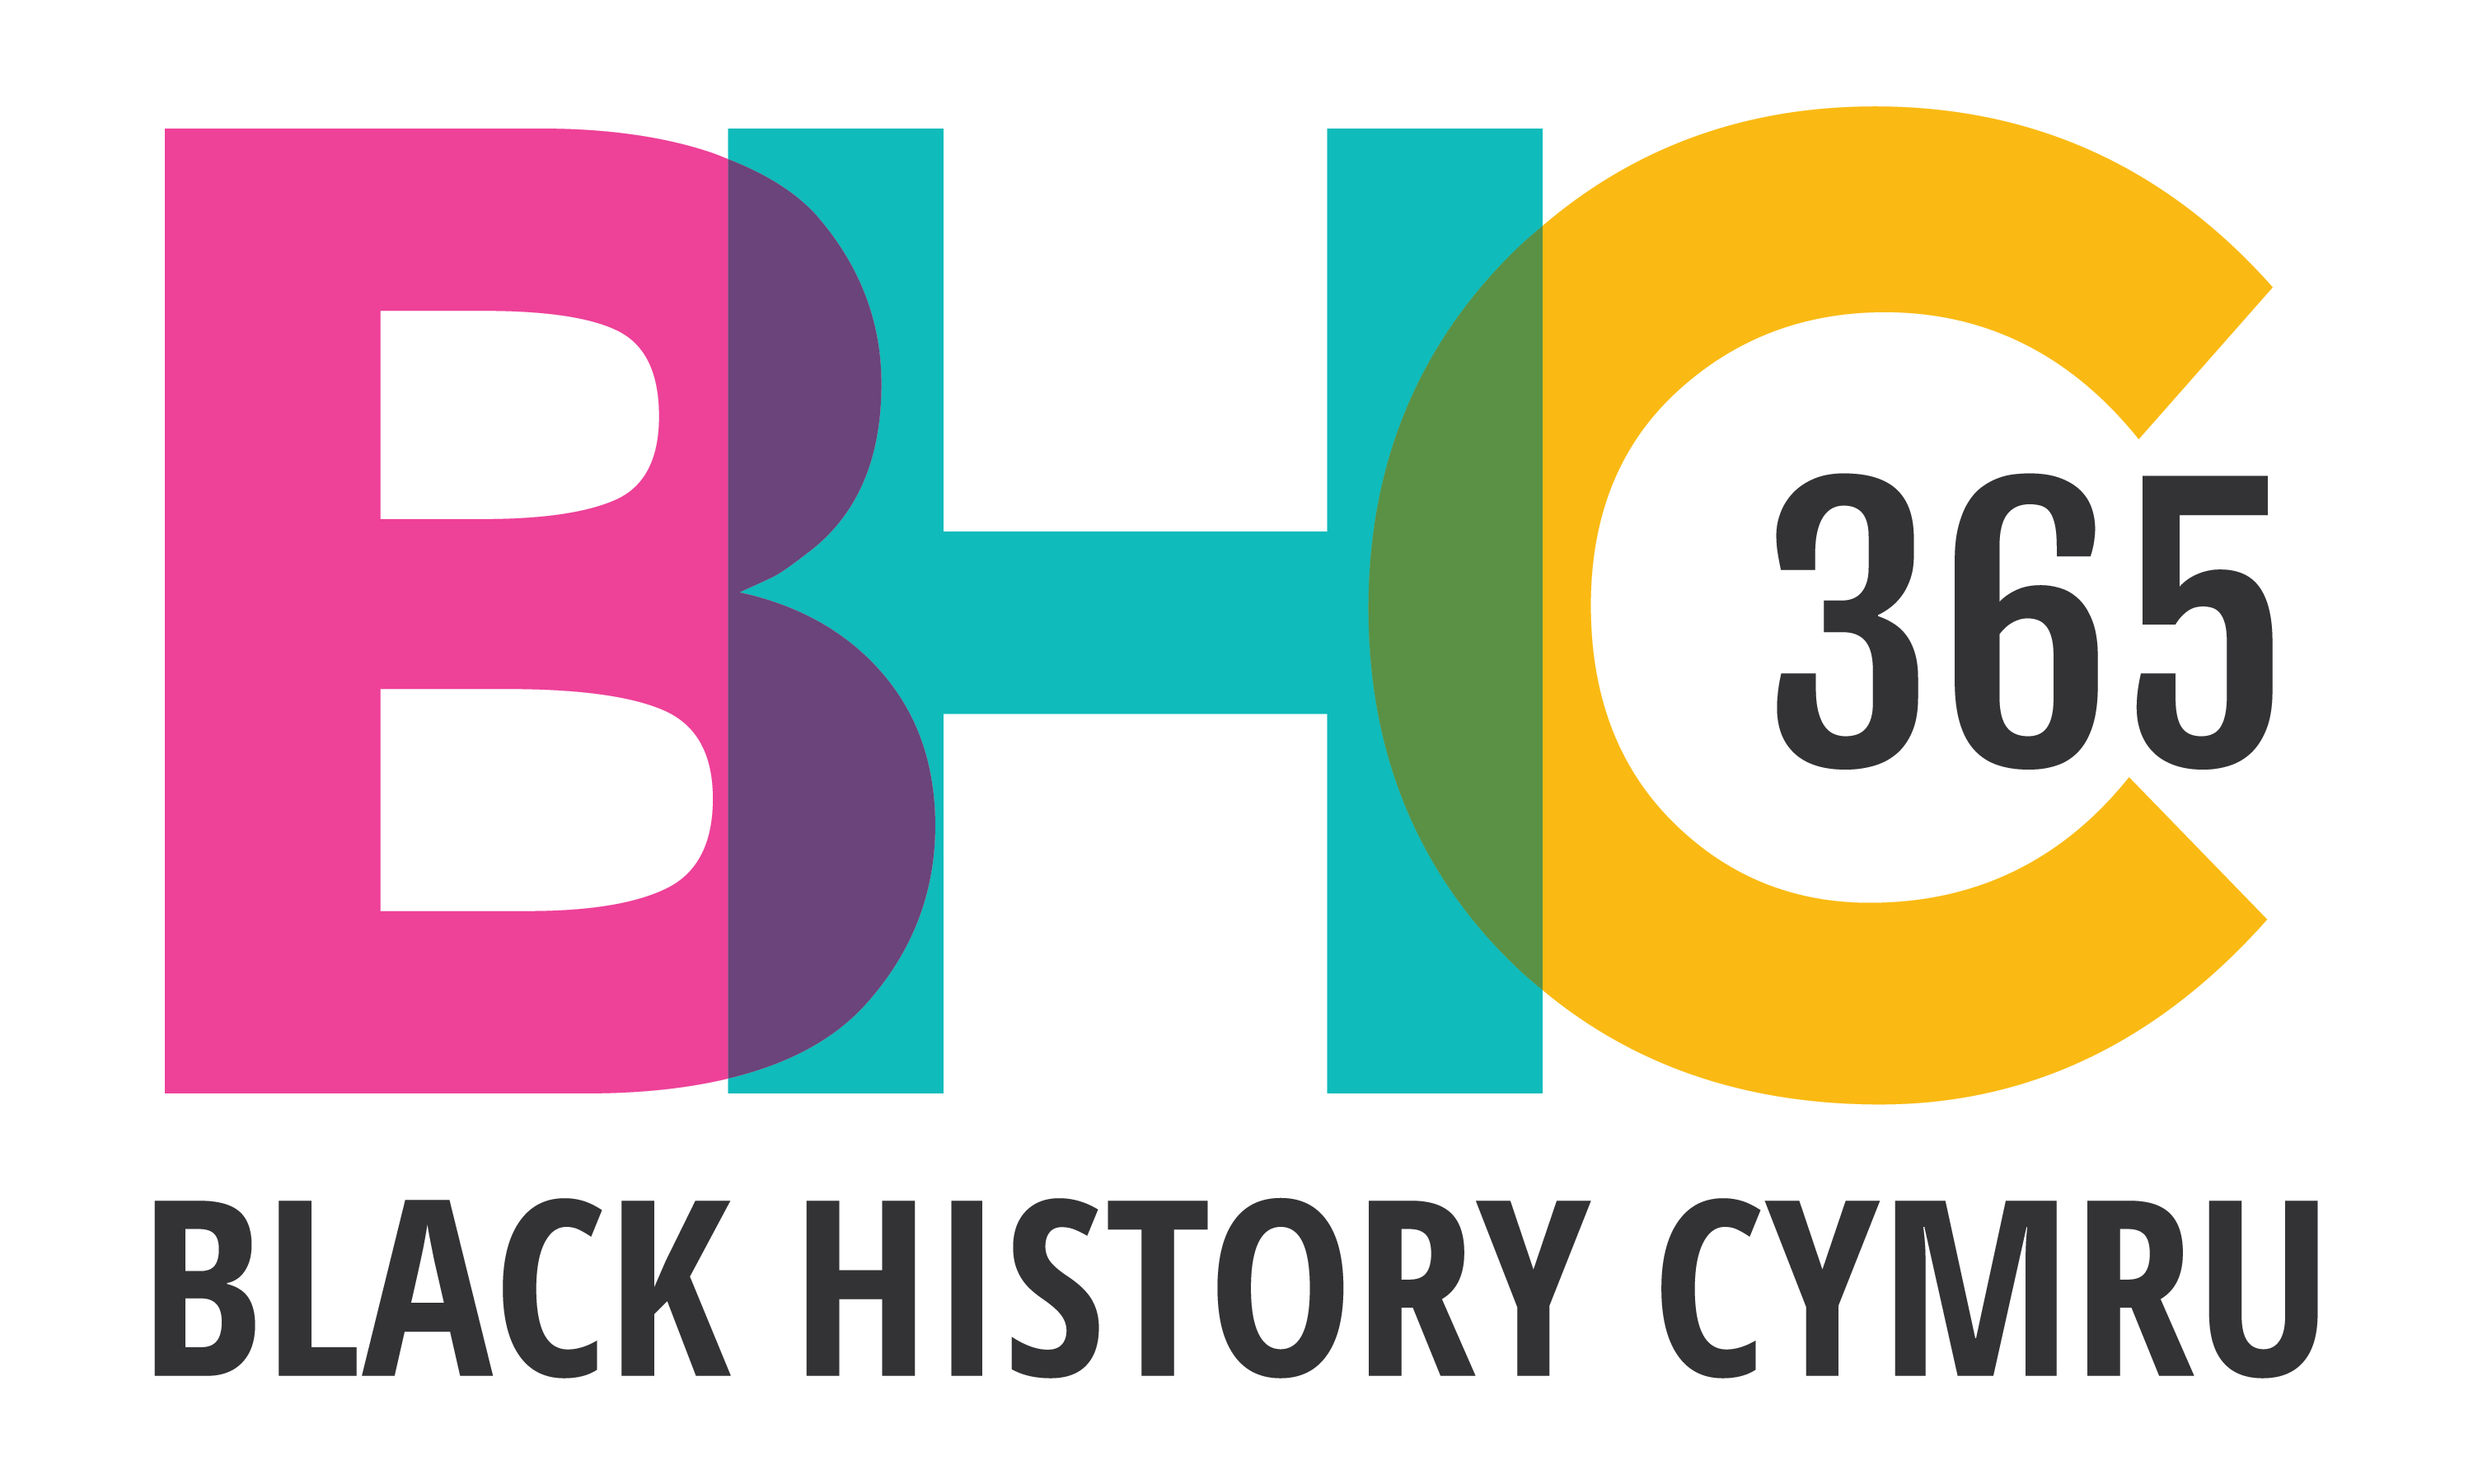 black history month wales 365 race council cymru BHCymru365 Logo Final